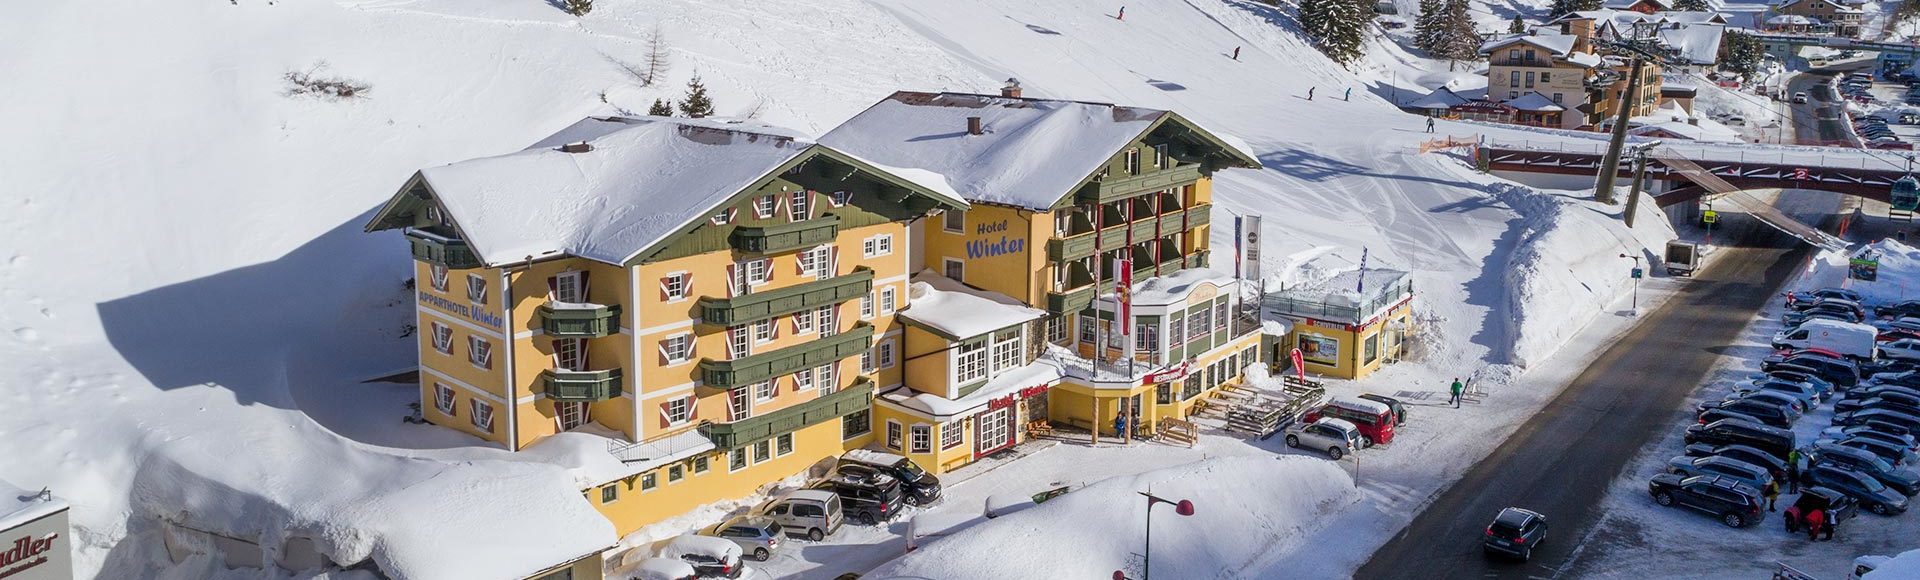 Winter- & Skiurlaub in Obertauern, 3-Sterne Hotel Winter